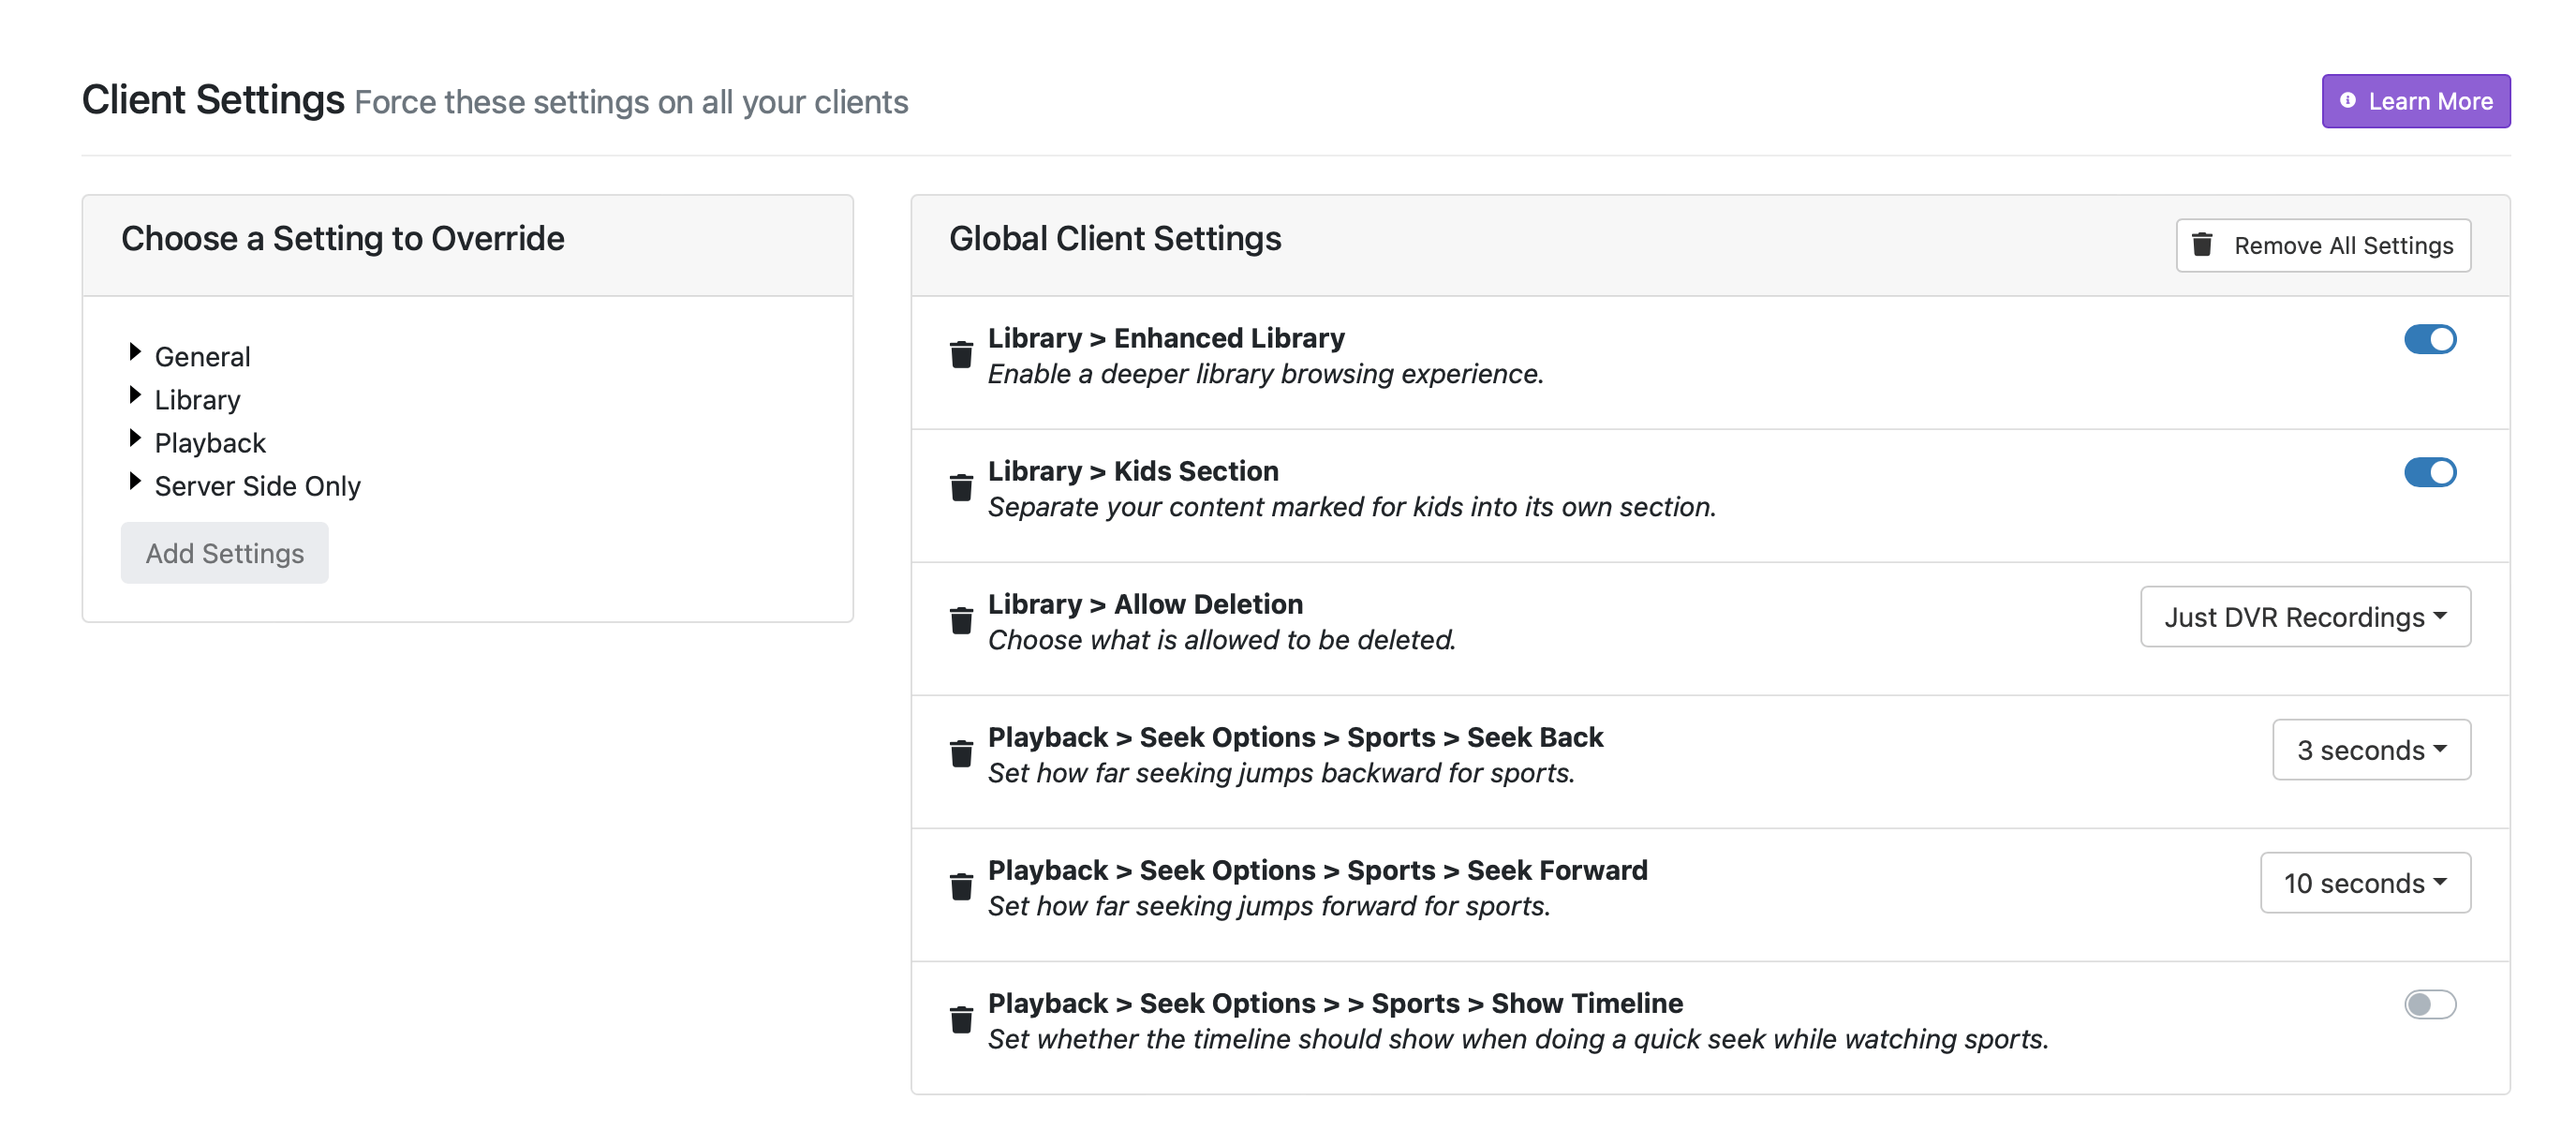 global server side settings